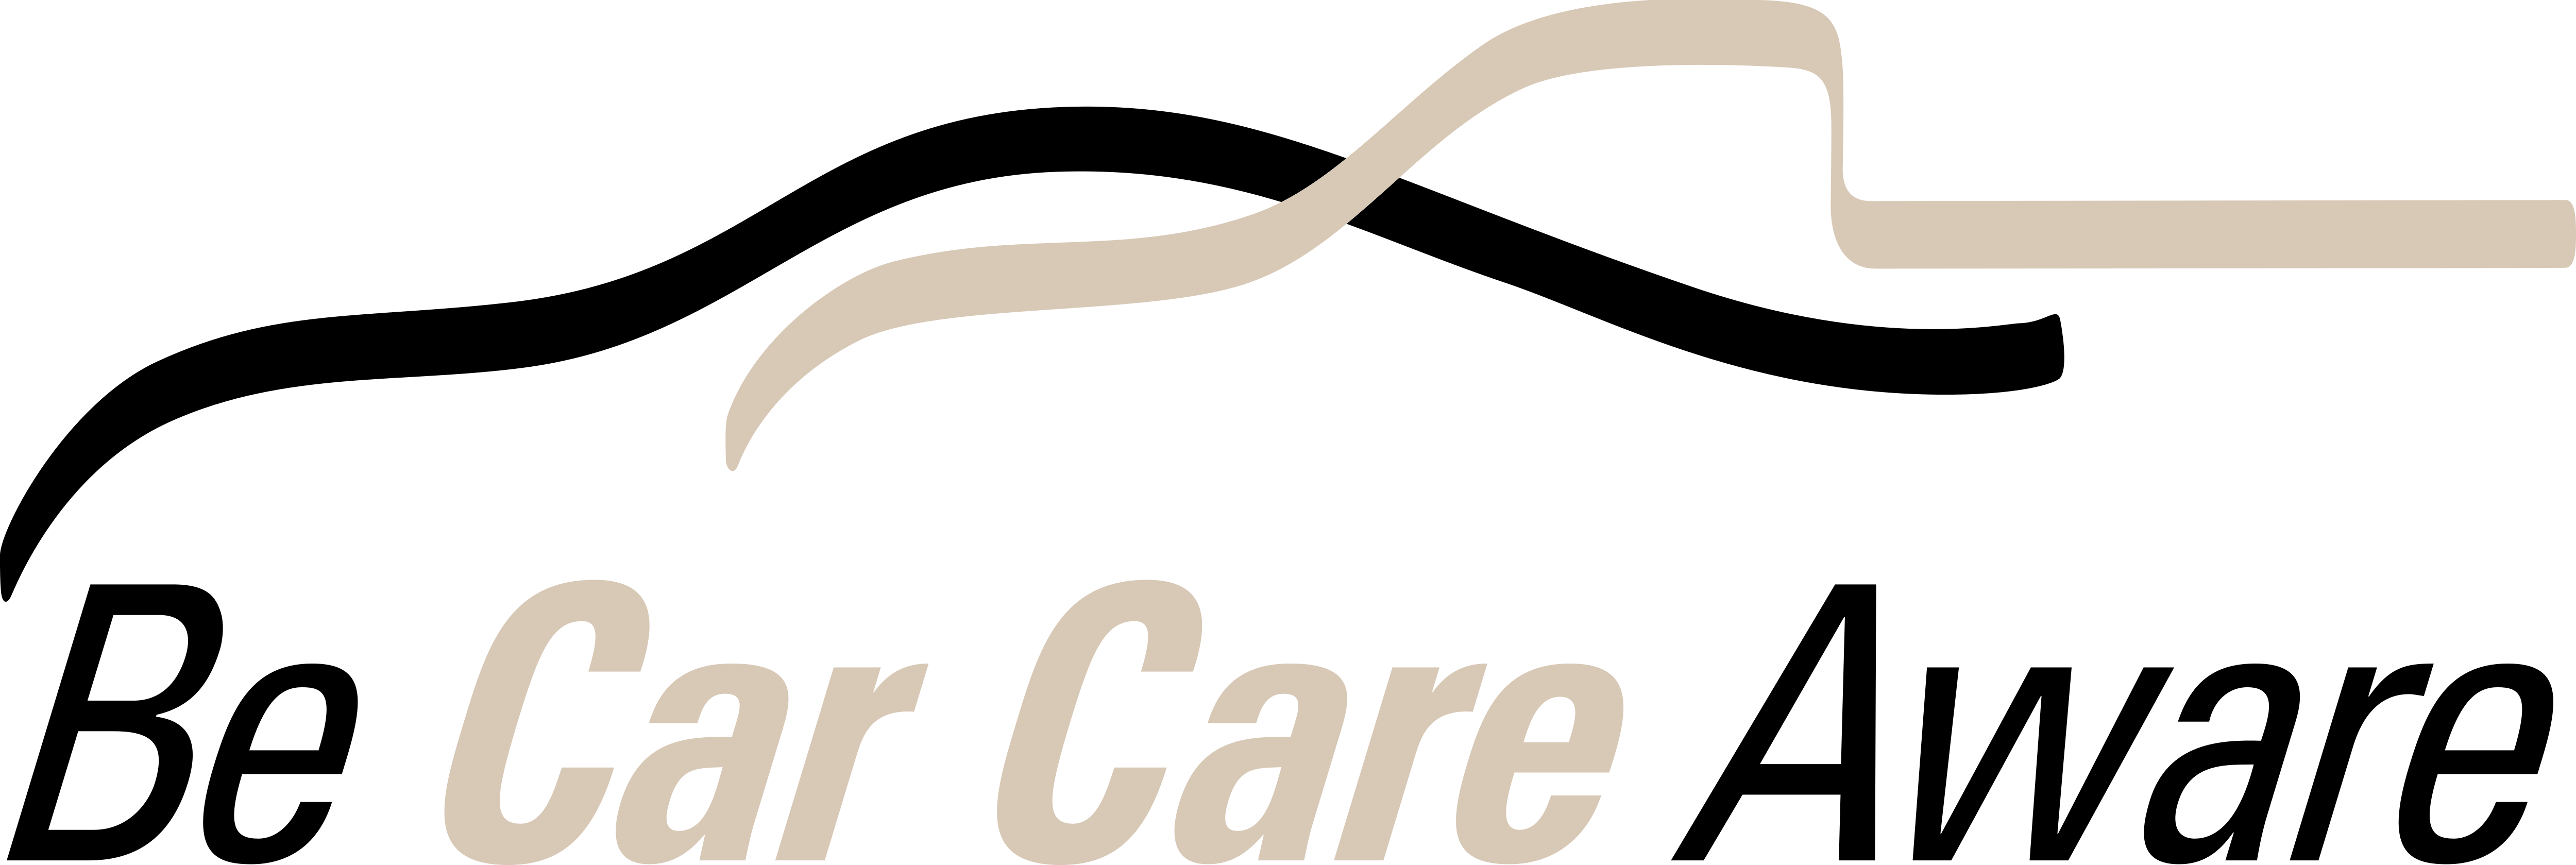 Car Care Aware (5000x1679)